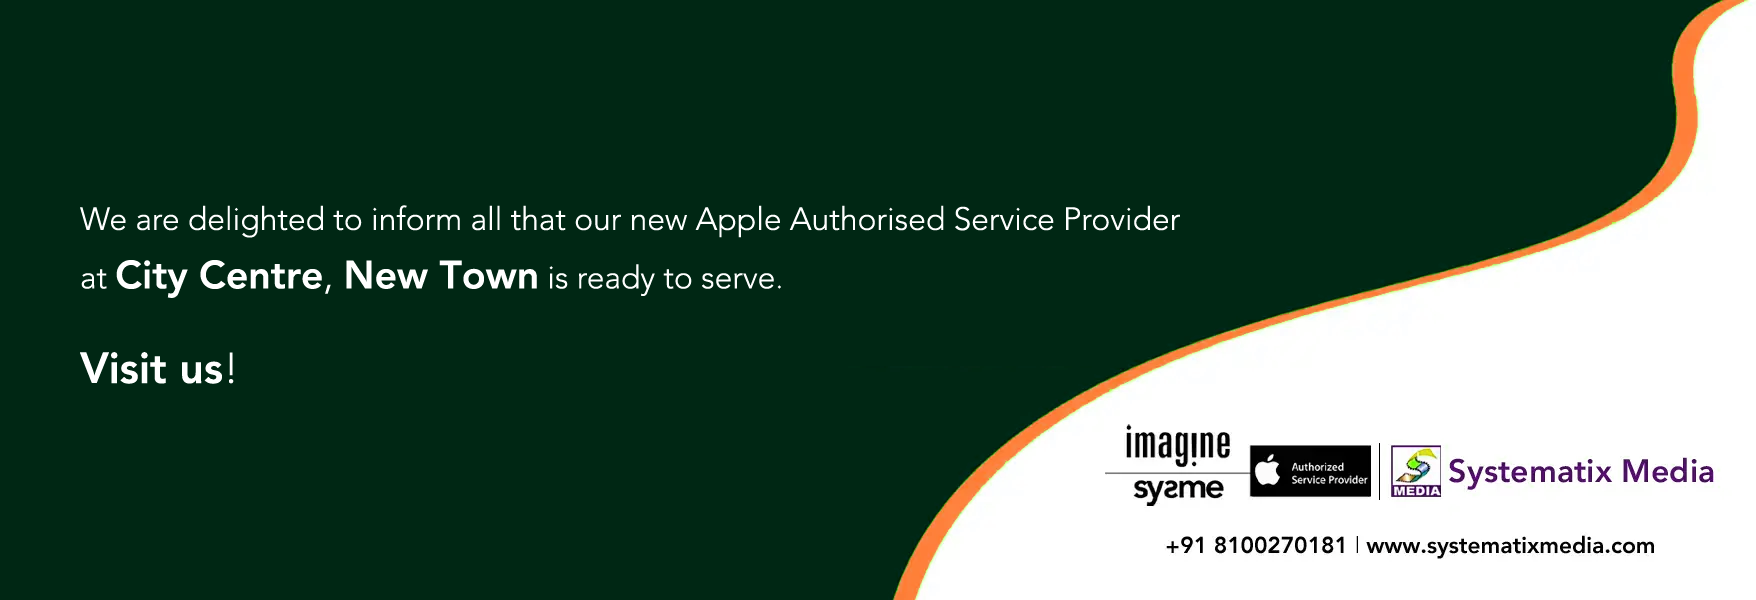 Apple Authorised Service